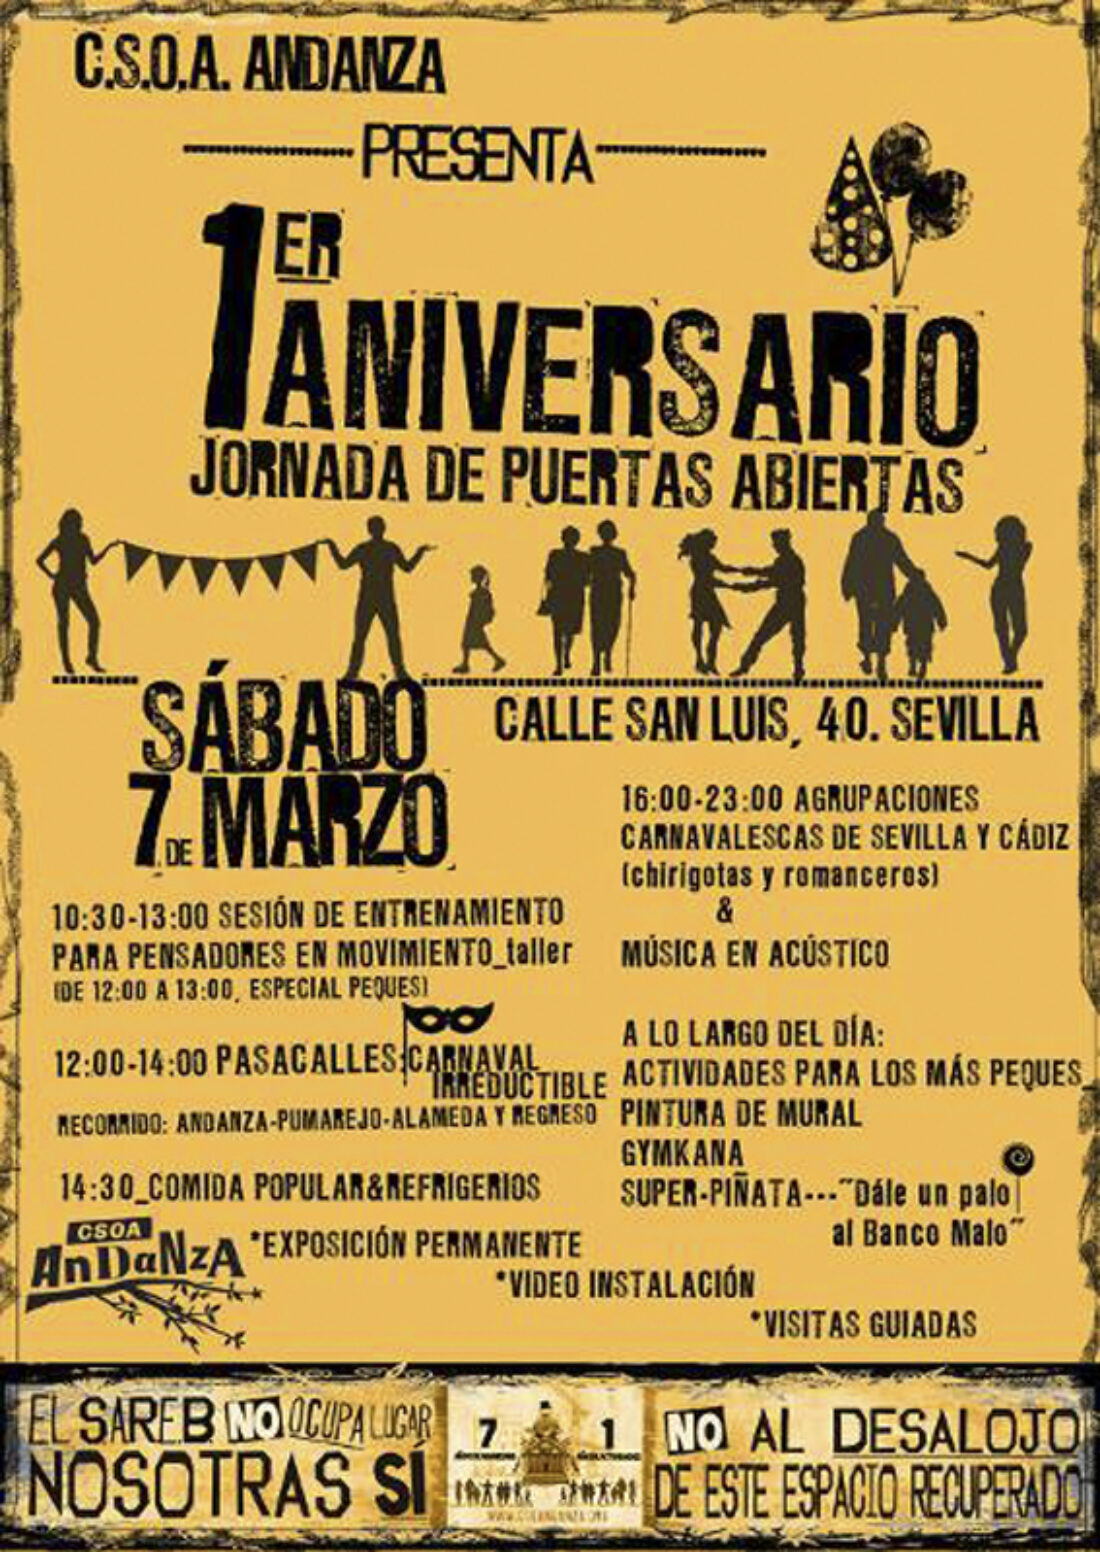 7-M: Jornadas Puertas Abiertas CSOA Andanza en Sevilla